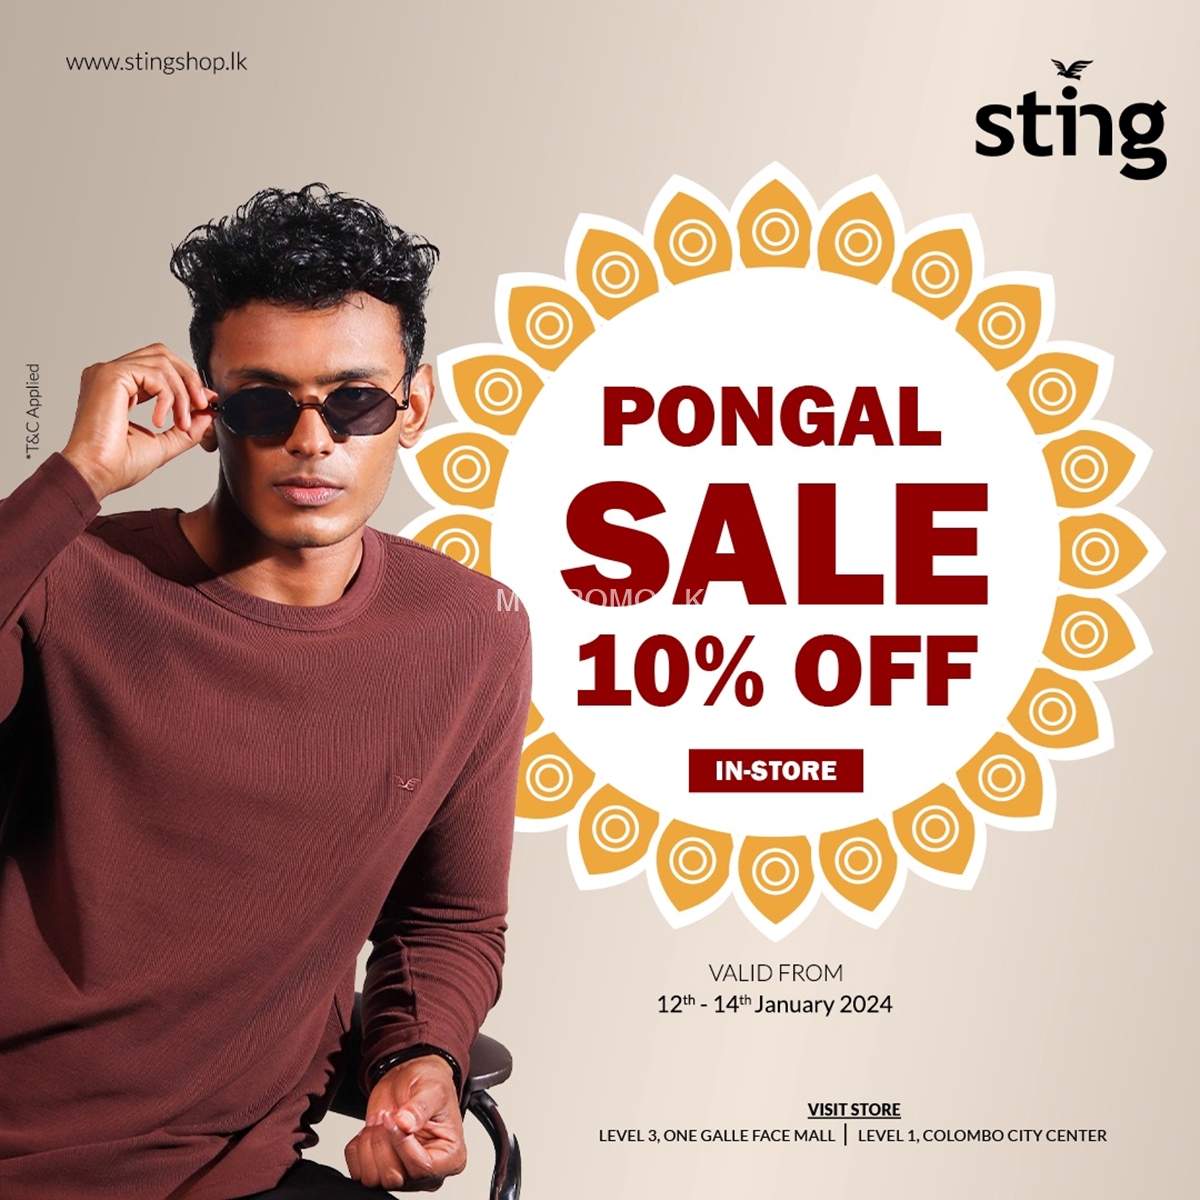 Enjoy a 10% festive discount at Sting Men's Wear